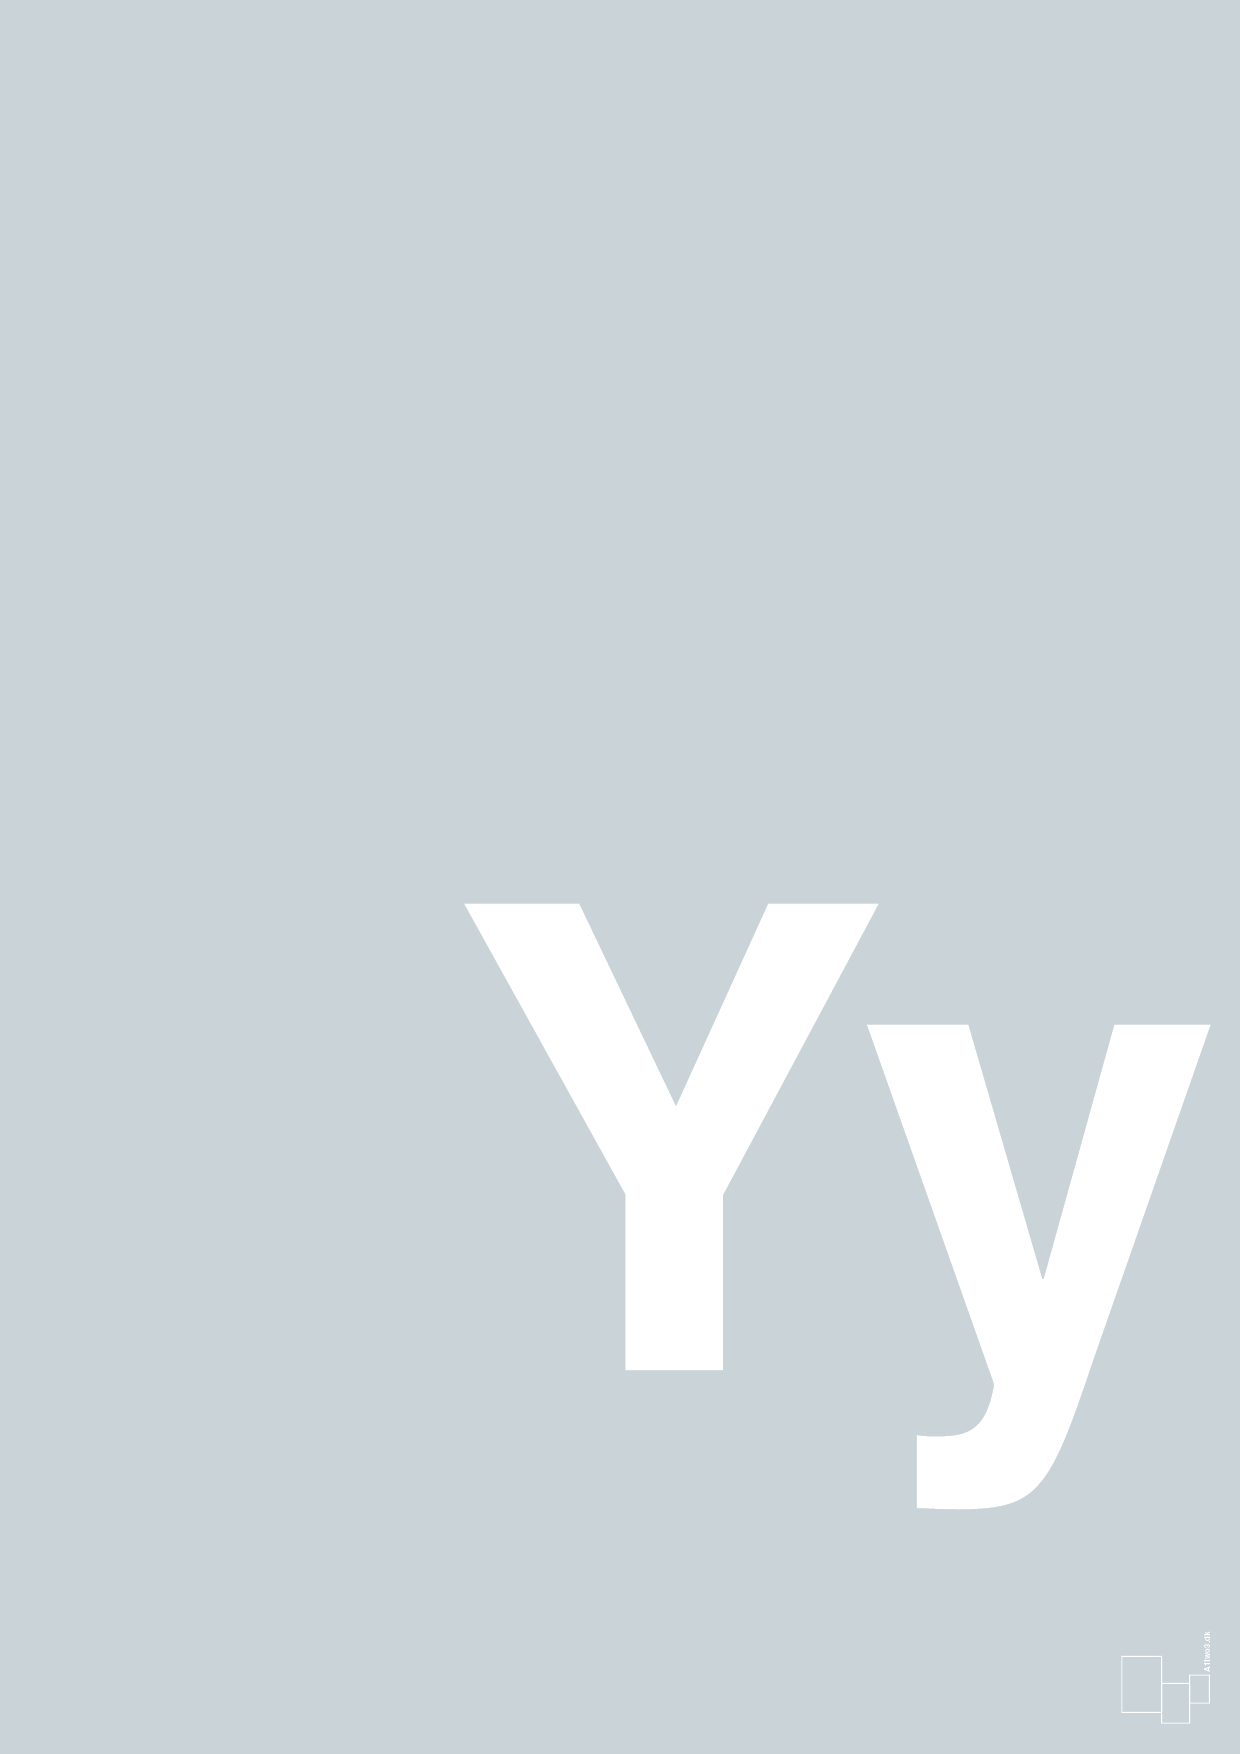 bogstav yy - Plakat med Bogstaver i Light Drizzle